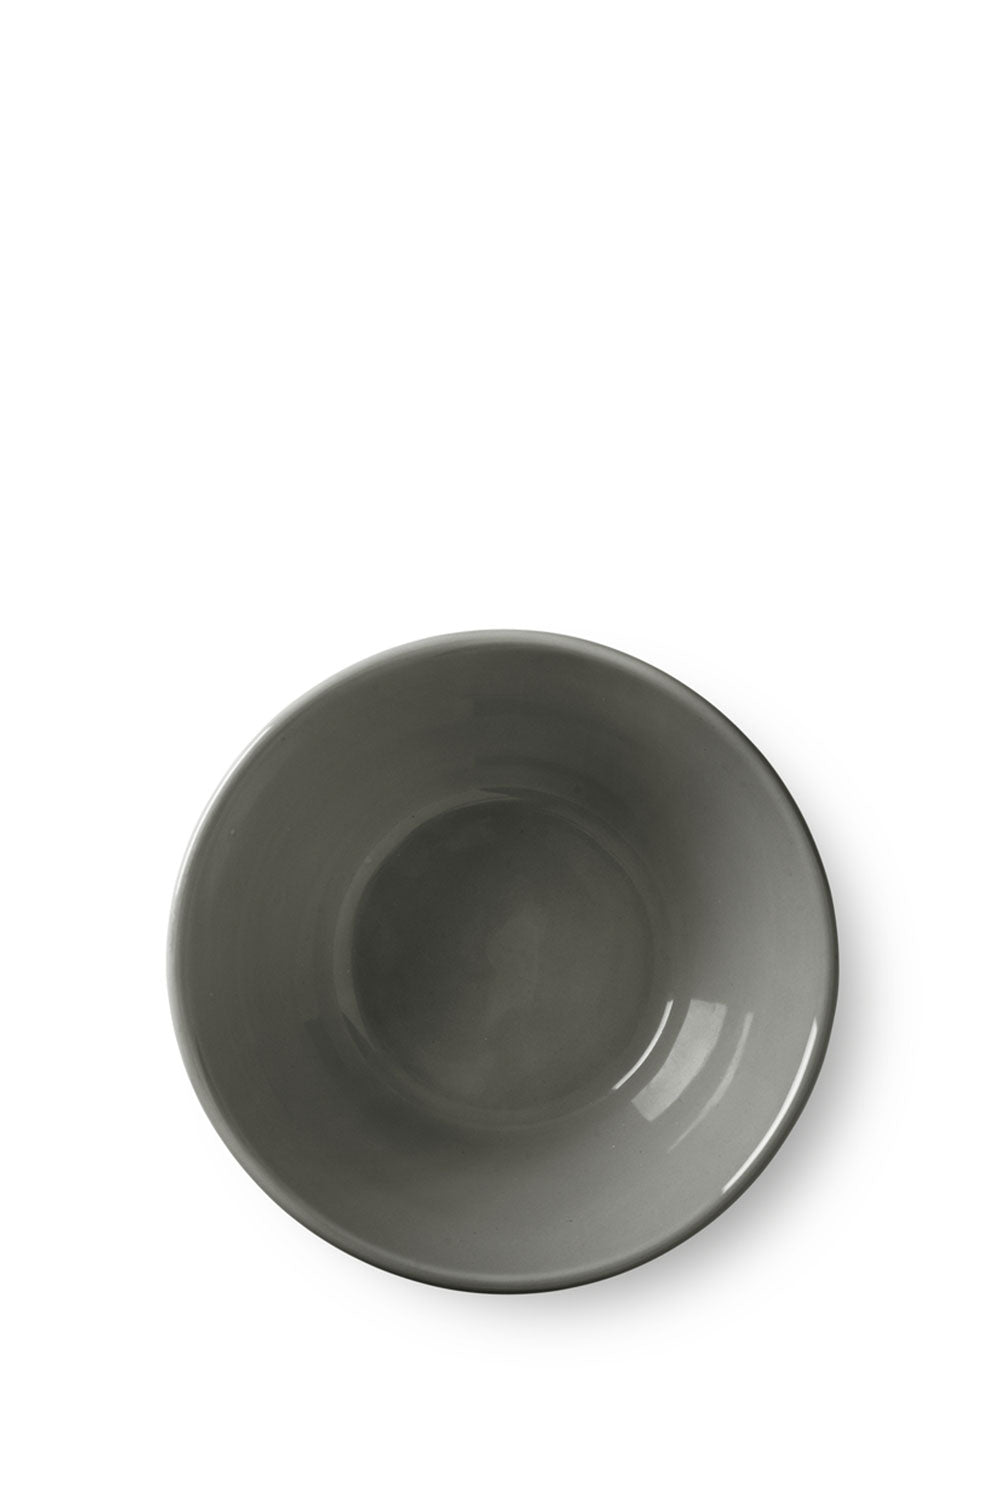 Grand Cru Bowl,15 cm, Ash Grey